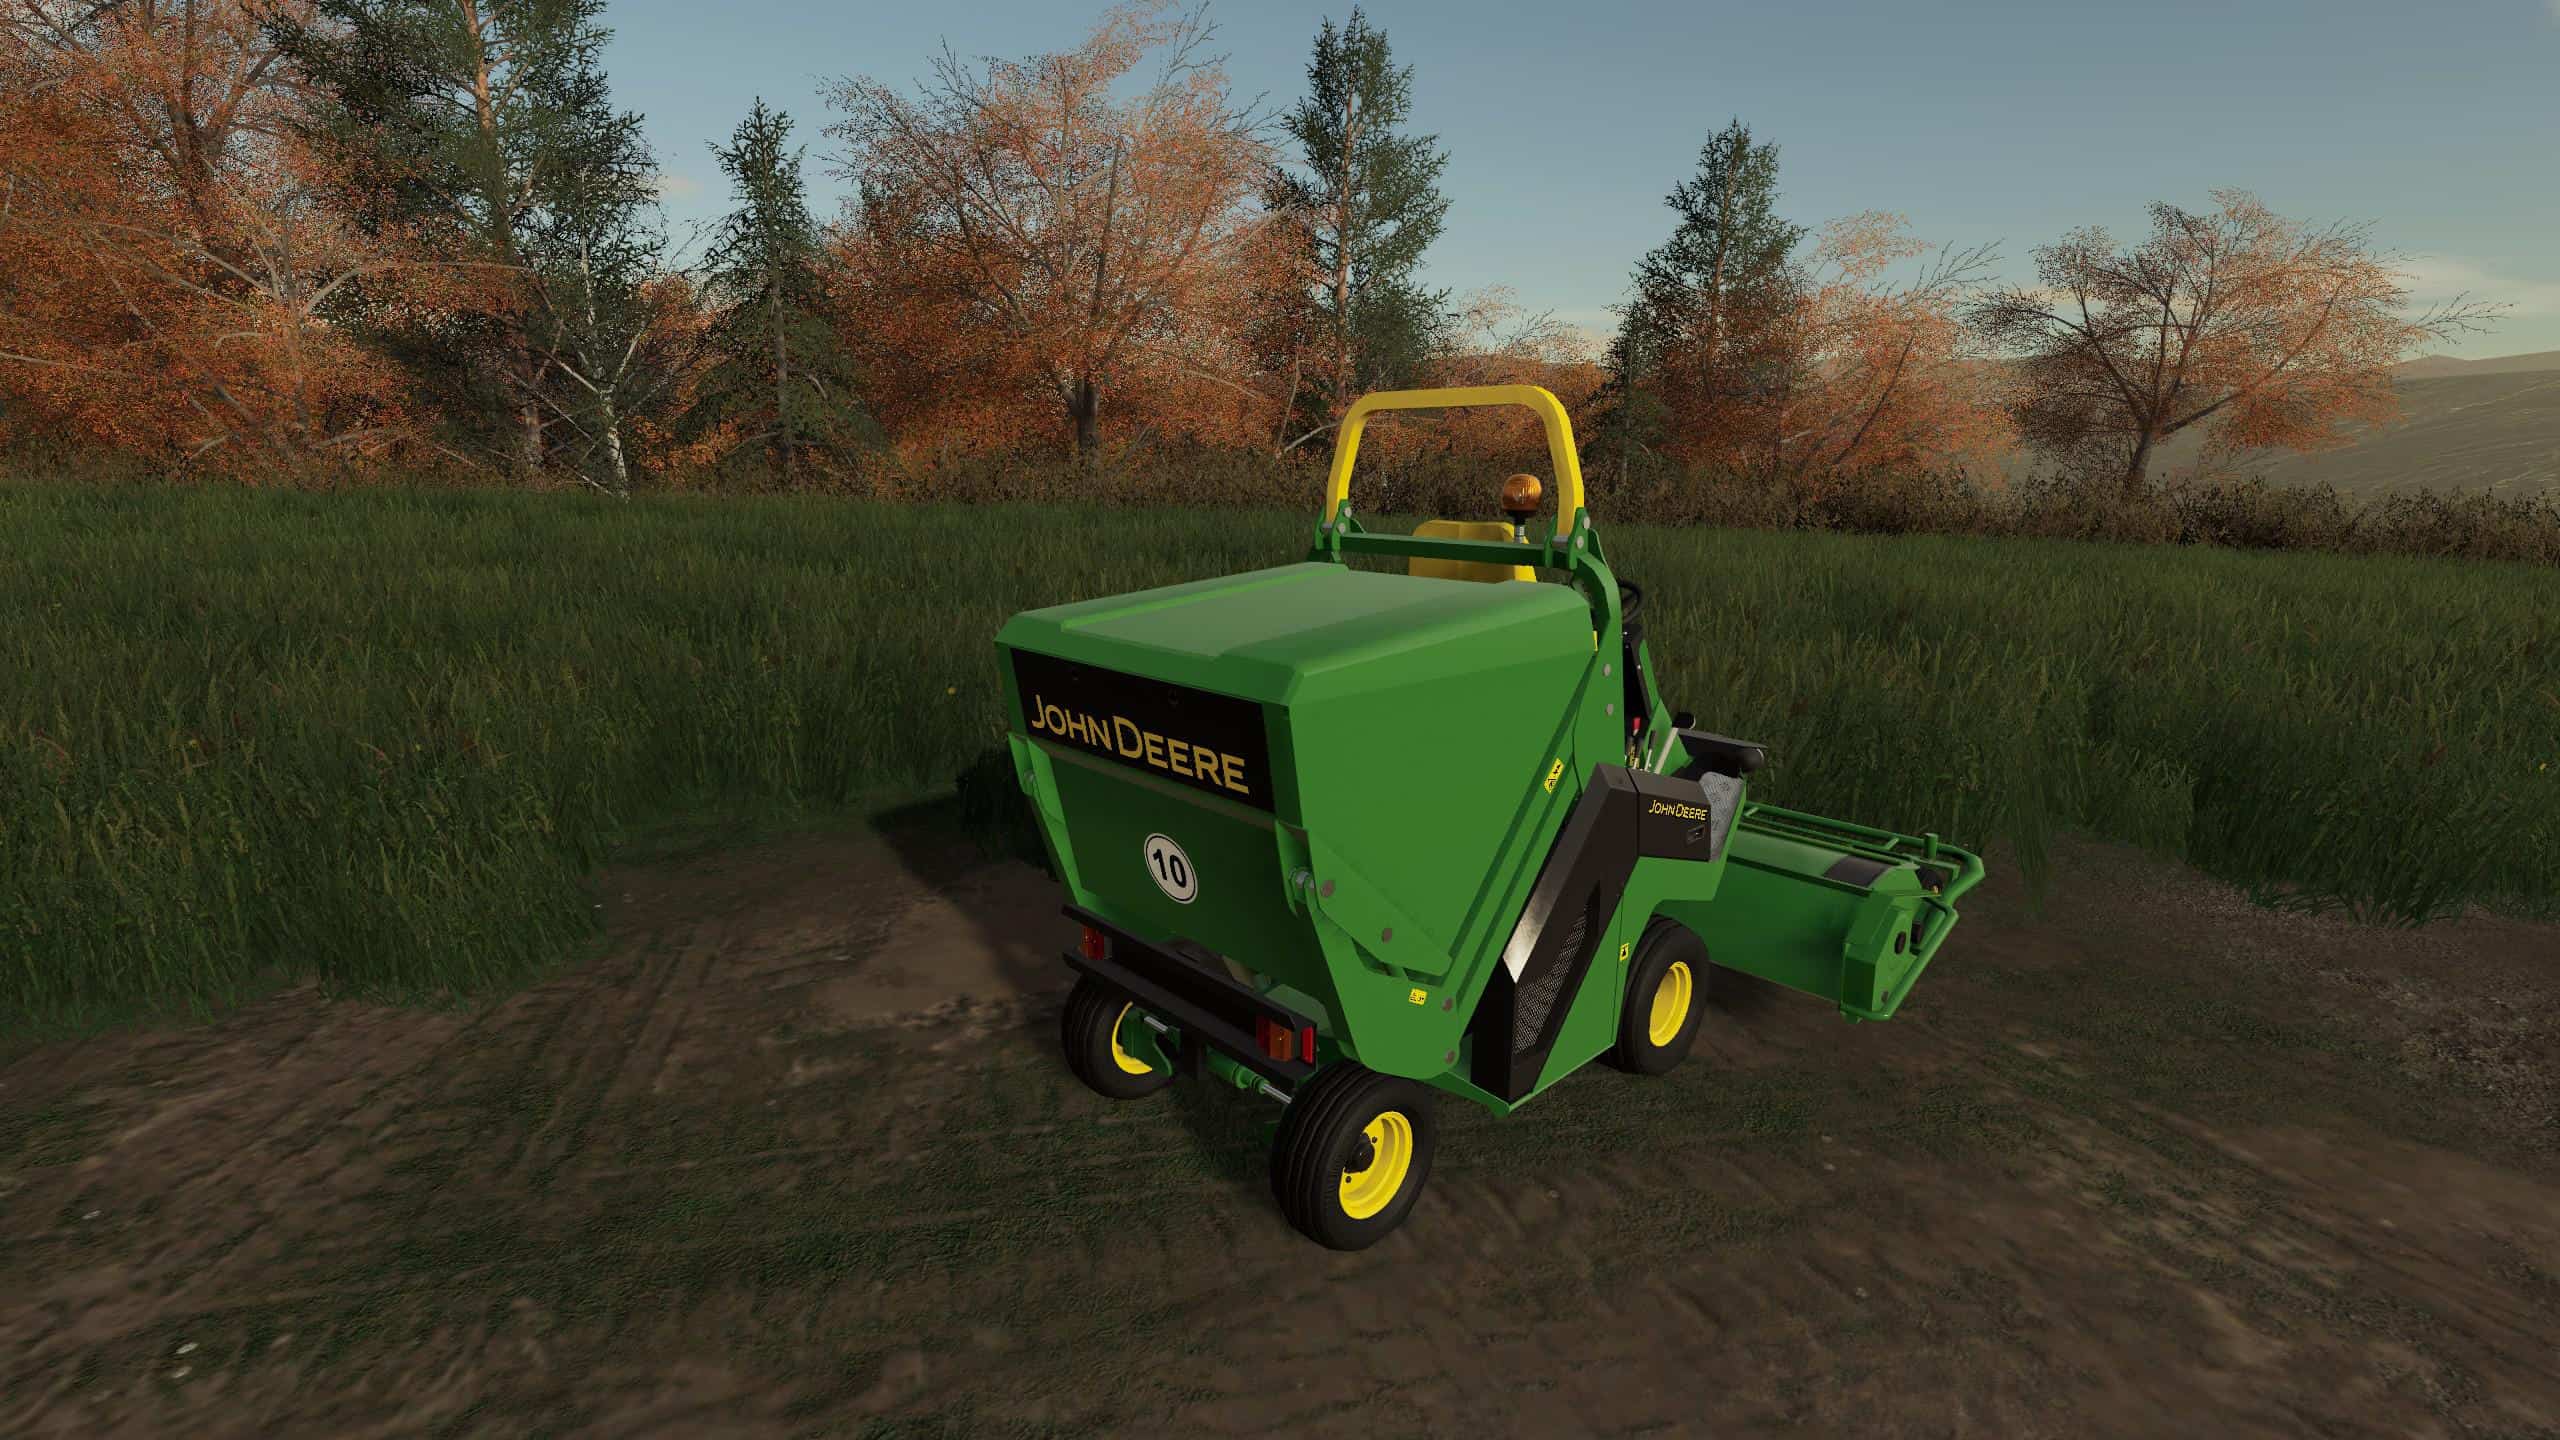 John Deere Mower v1.0 Mod - Farming Simulator 19 Mod / FS19